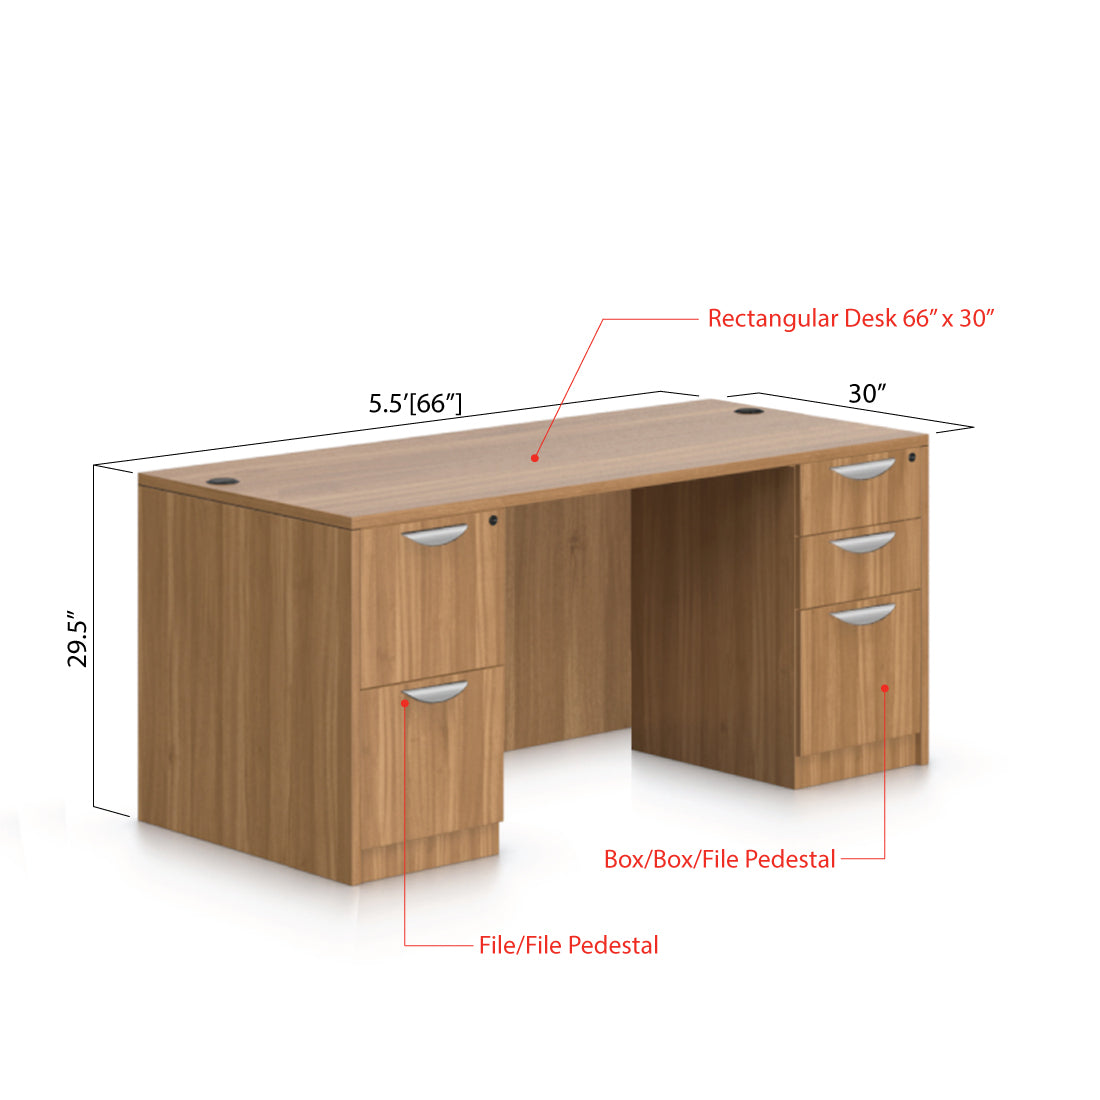 66"x30" Rectangular Desk with B/B/F pedestal and F/F Pedestal - Kainosbuy.com